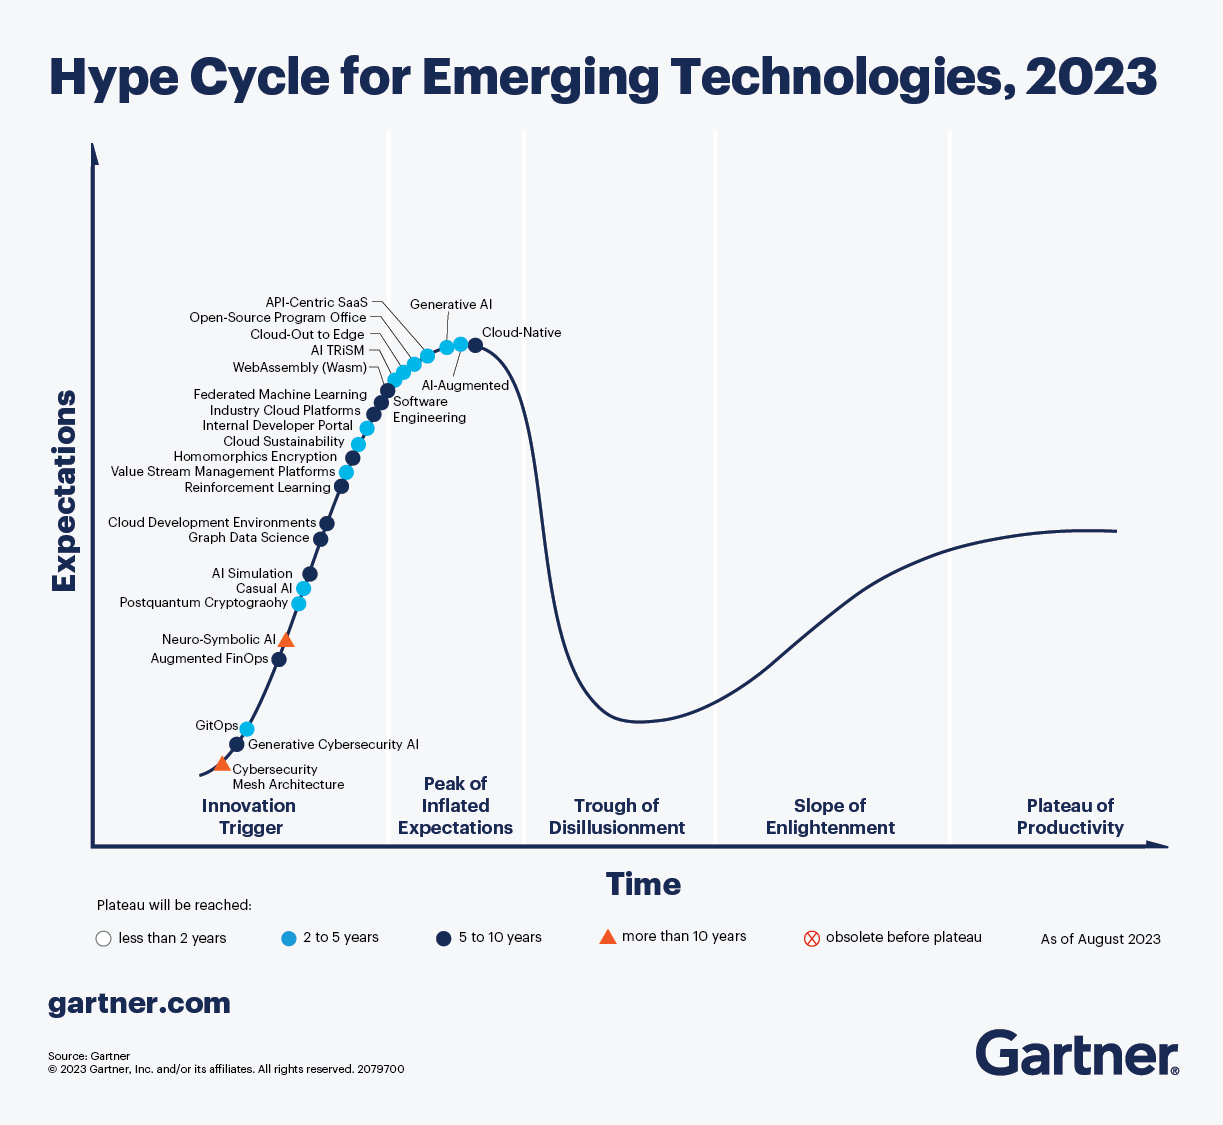 Hype Cycle for Emerging Technologies 2023 GenAI